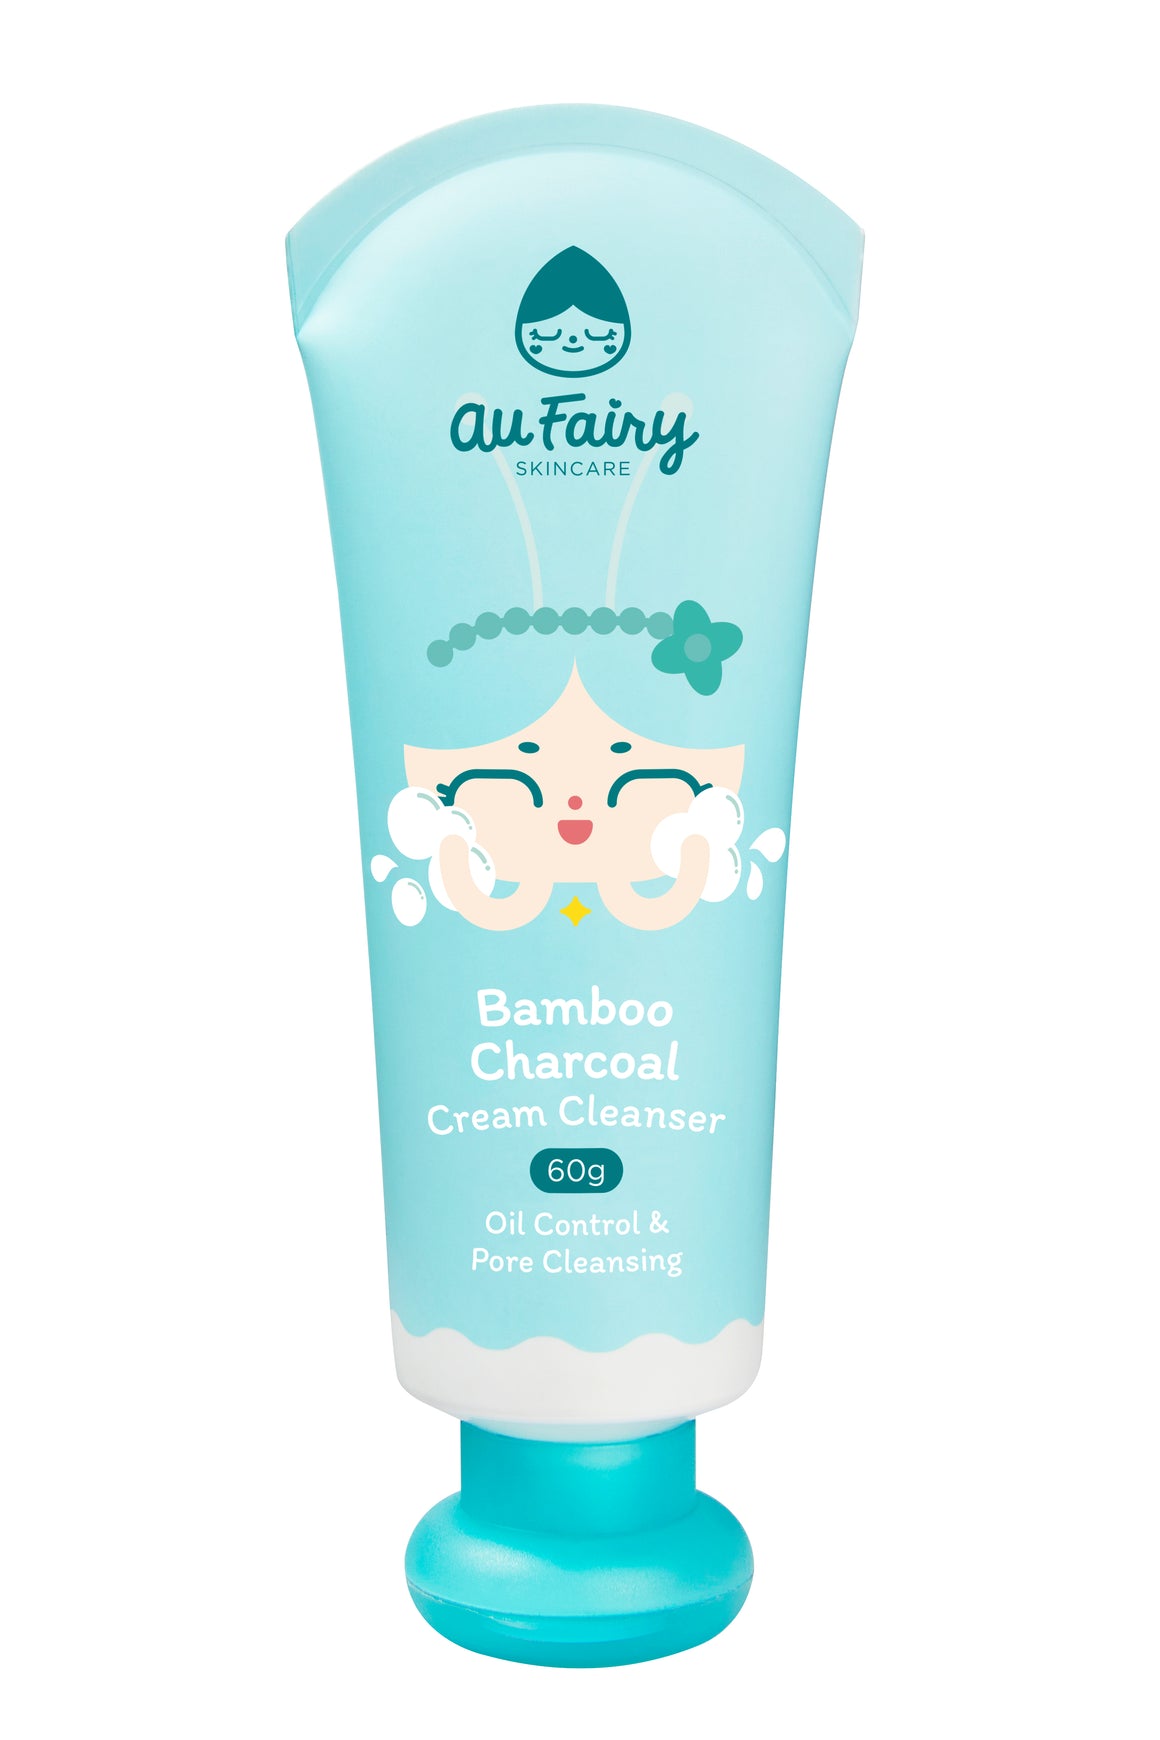 Au Fairy Bamboo Charcoal Cream Cleanser - Oily Skin 60g